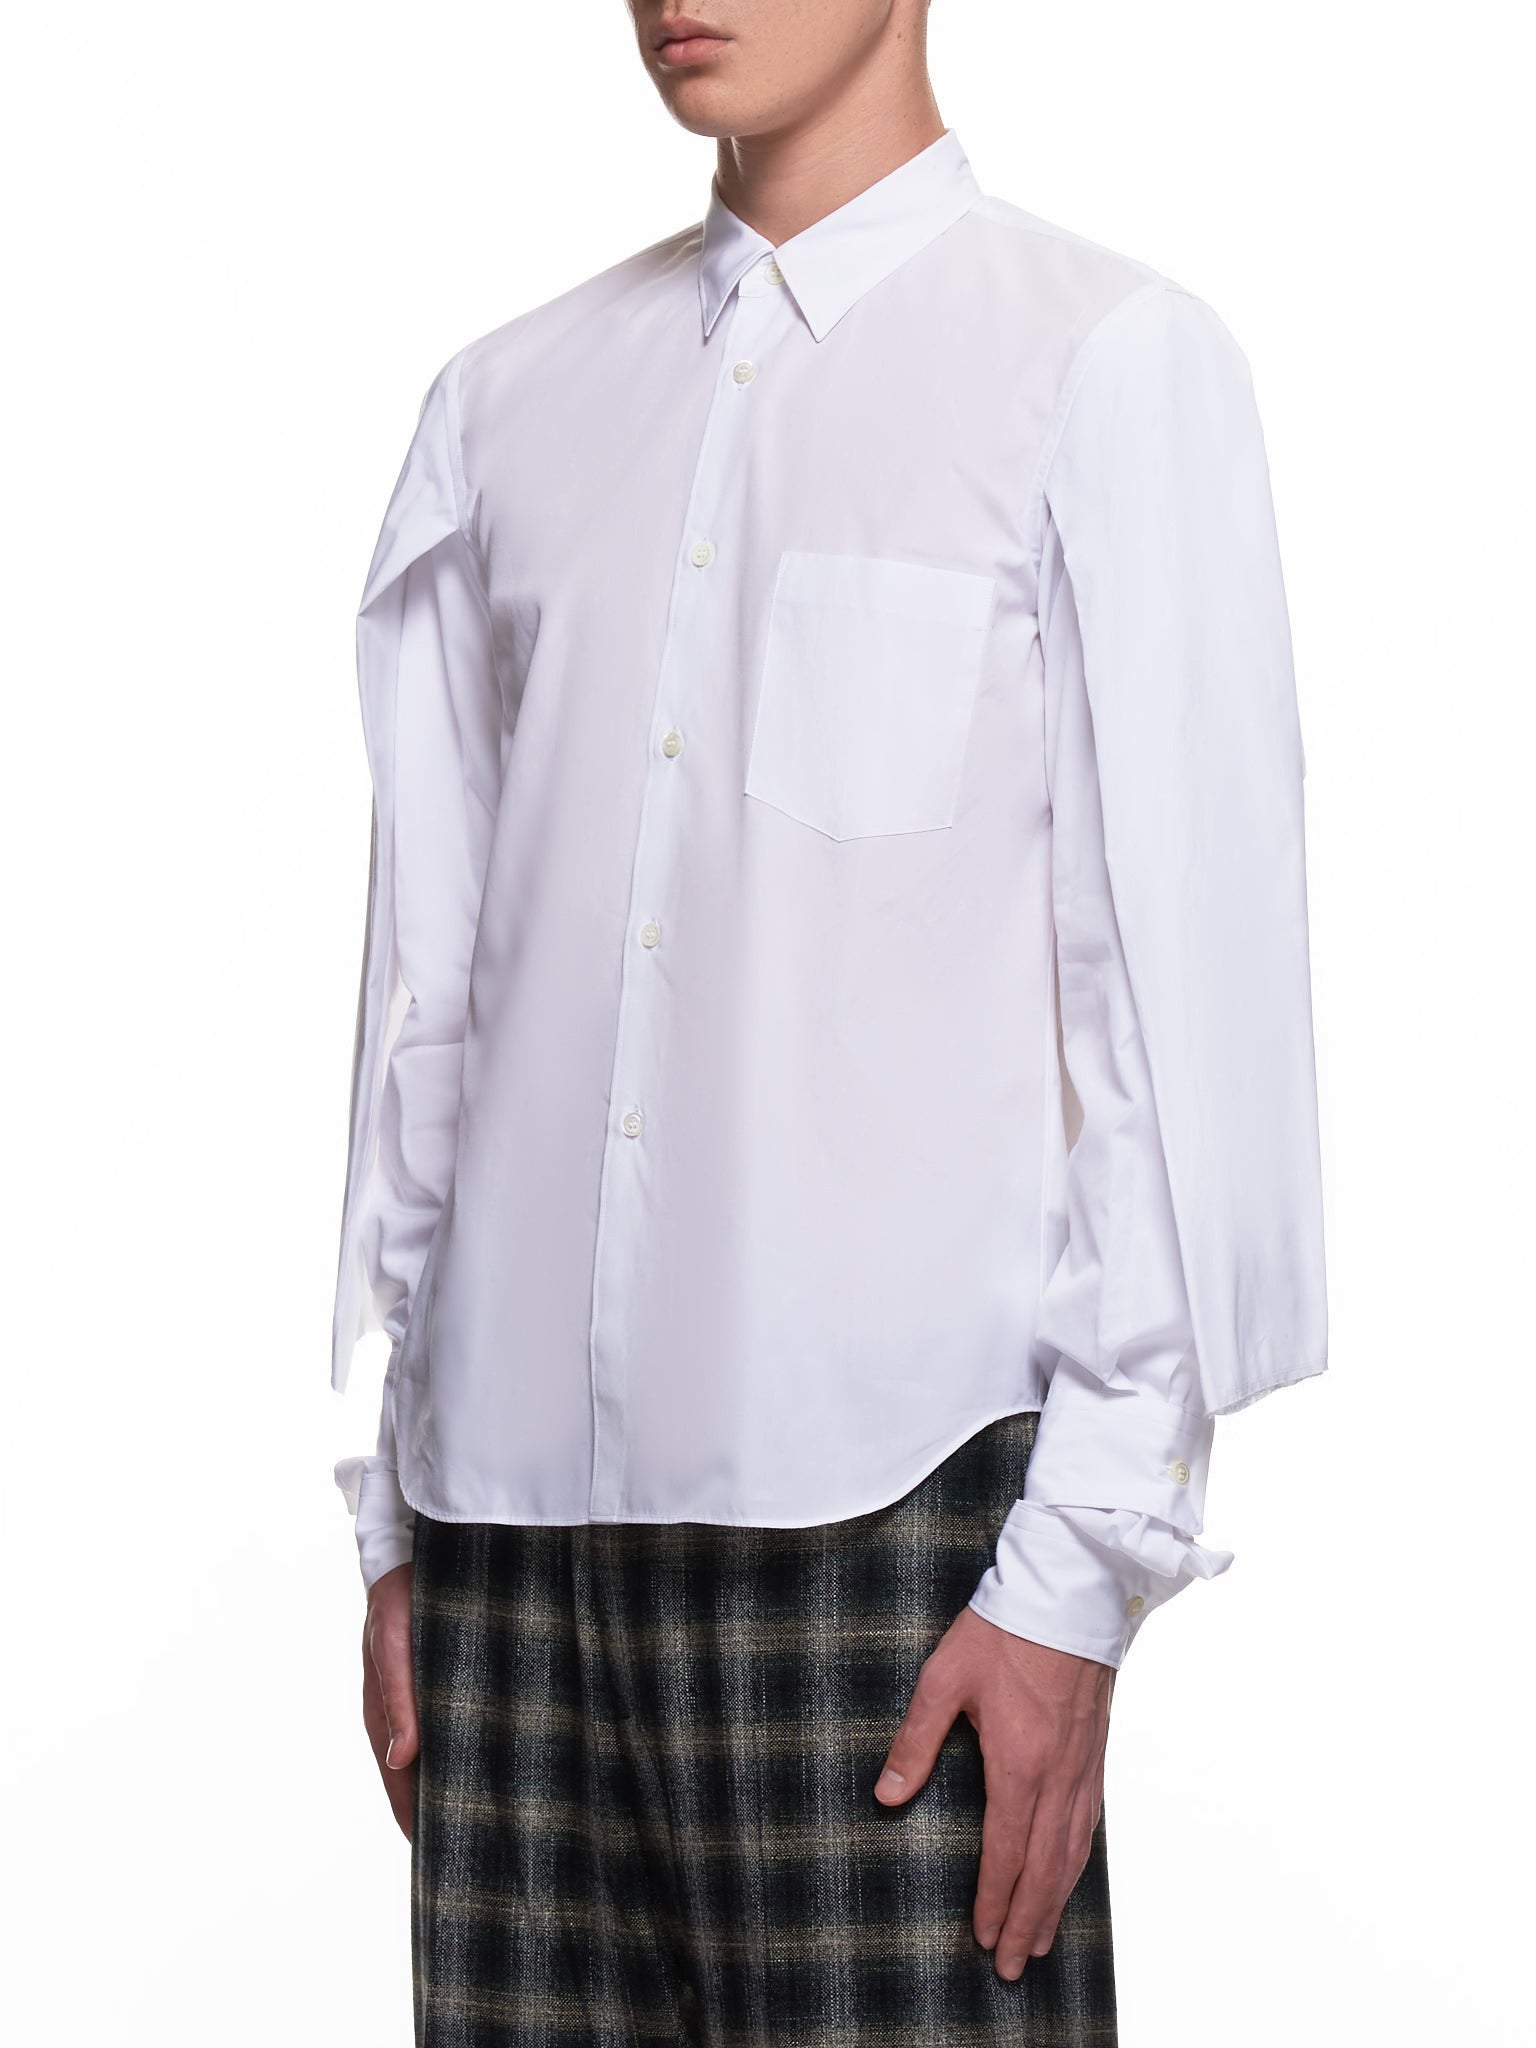 Sleeve Layered (PF-B007-051-WHITE) Button-Up Shirt